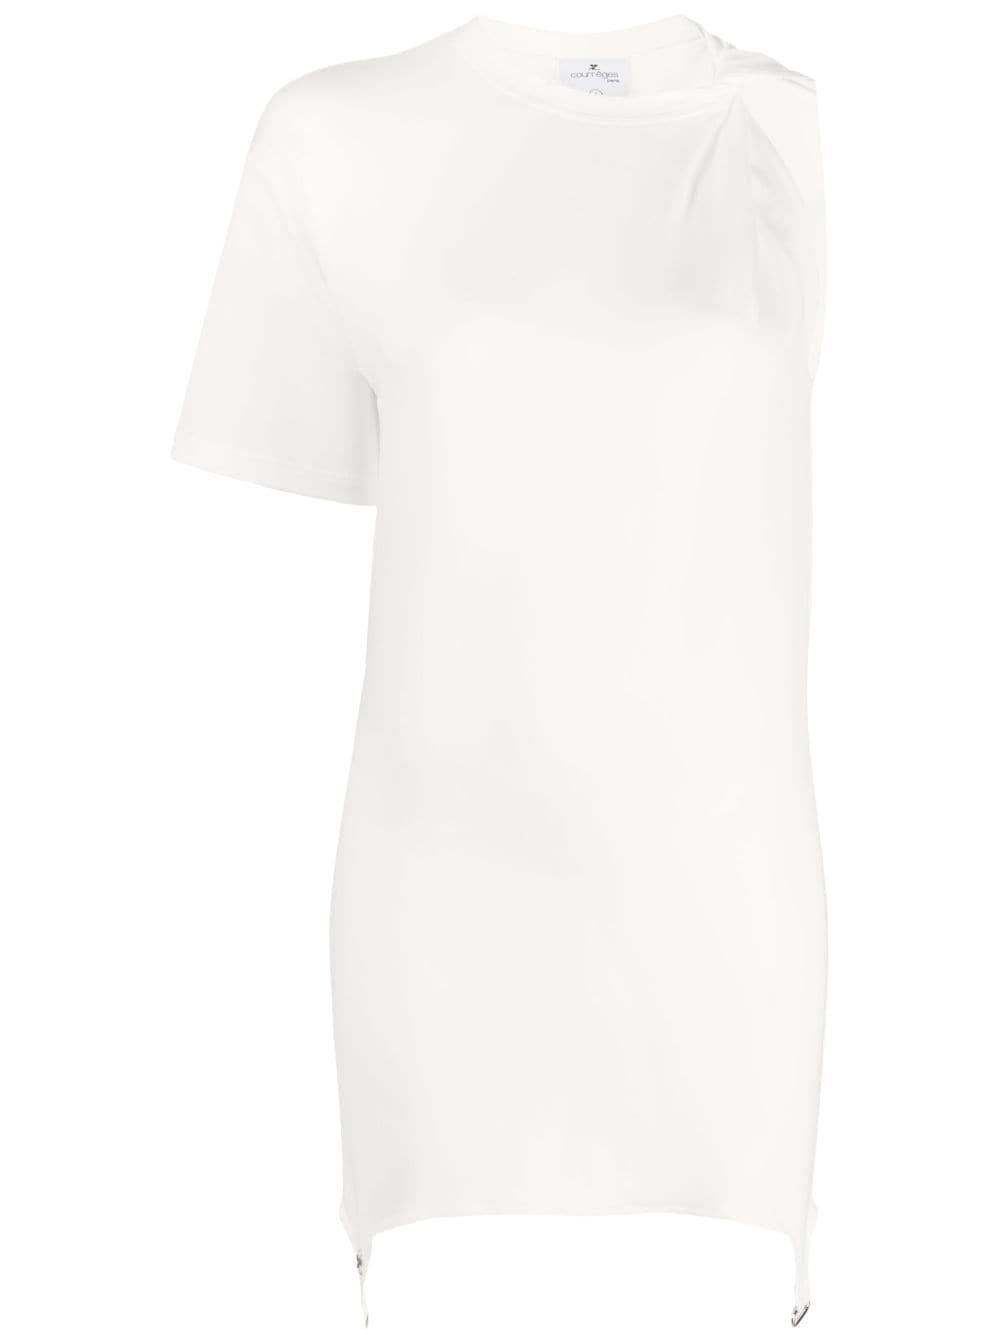 COURREGÈS Heritage White Short-Sleeve Dress for Women